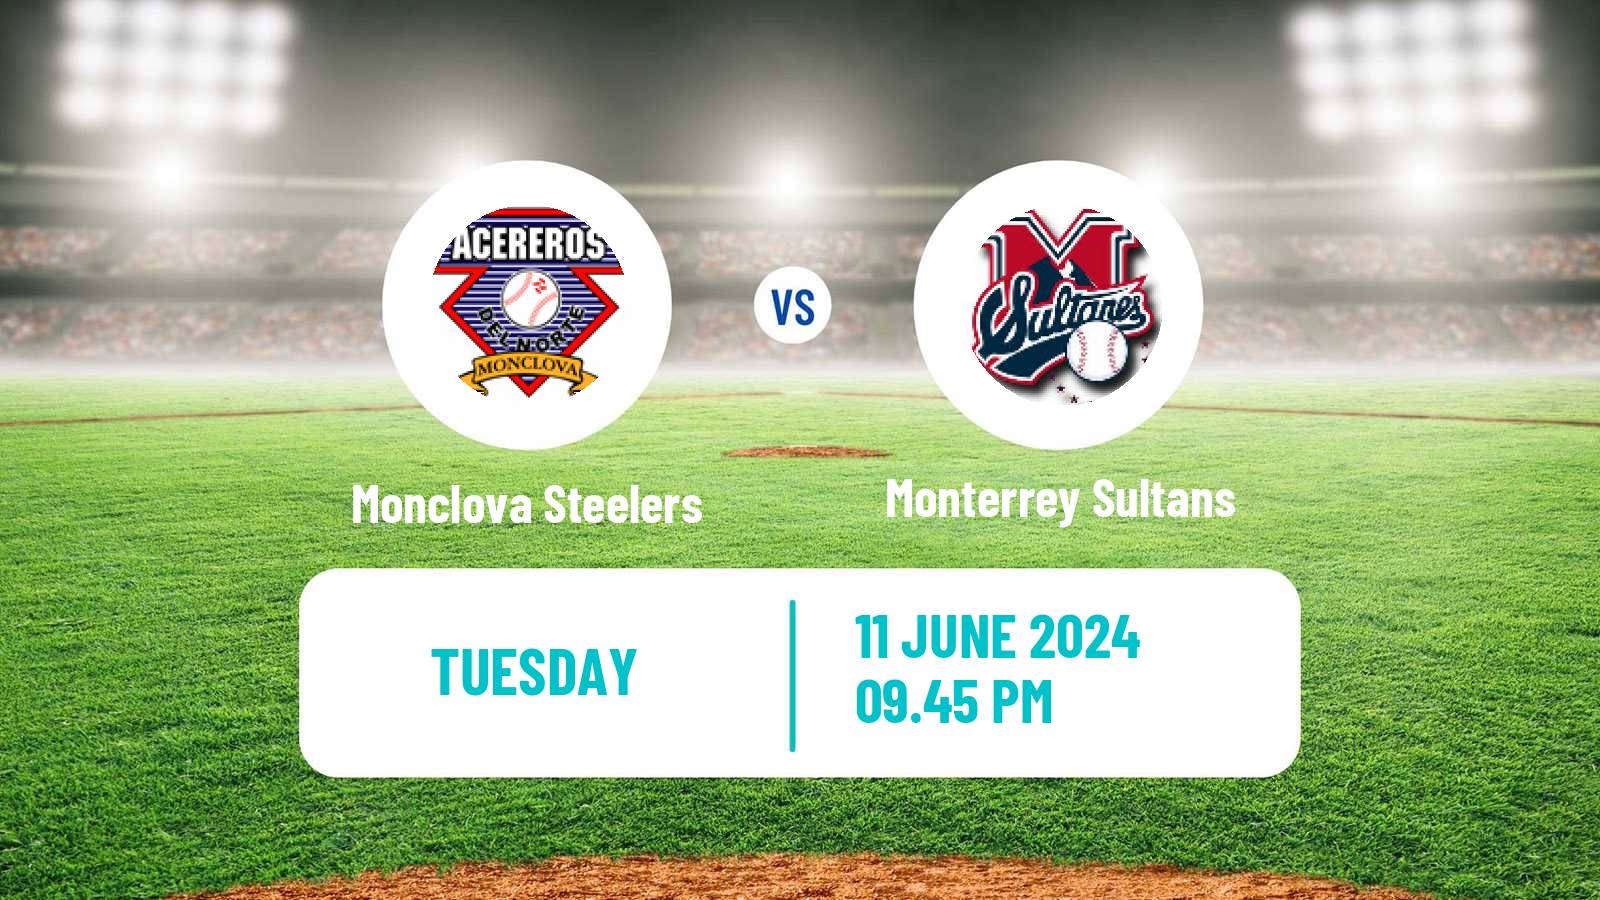 Baseball LMB Monclova Steelers - Monterrey Sultans